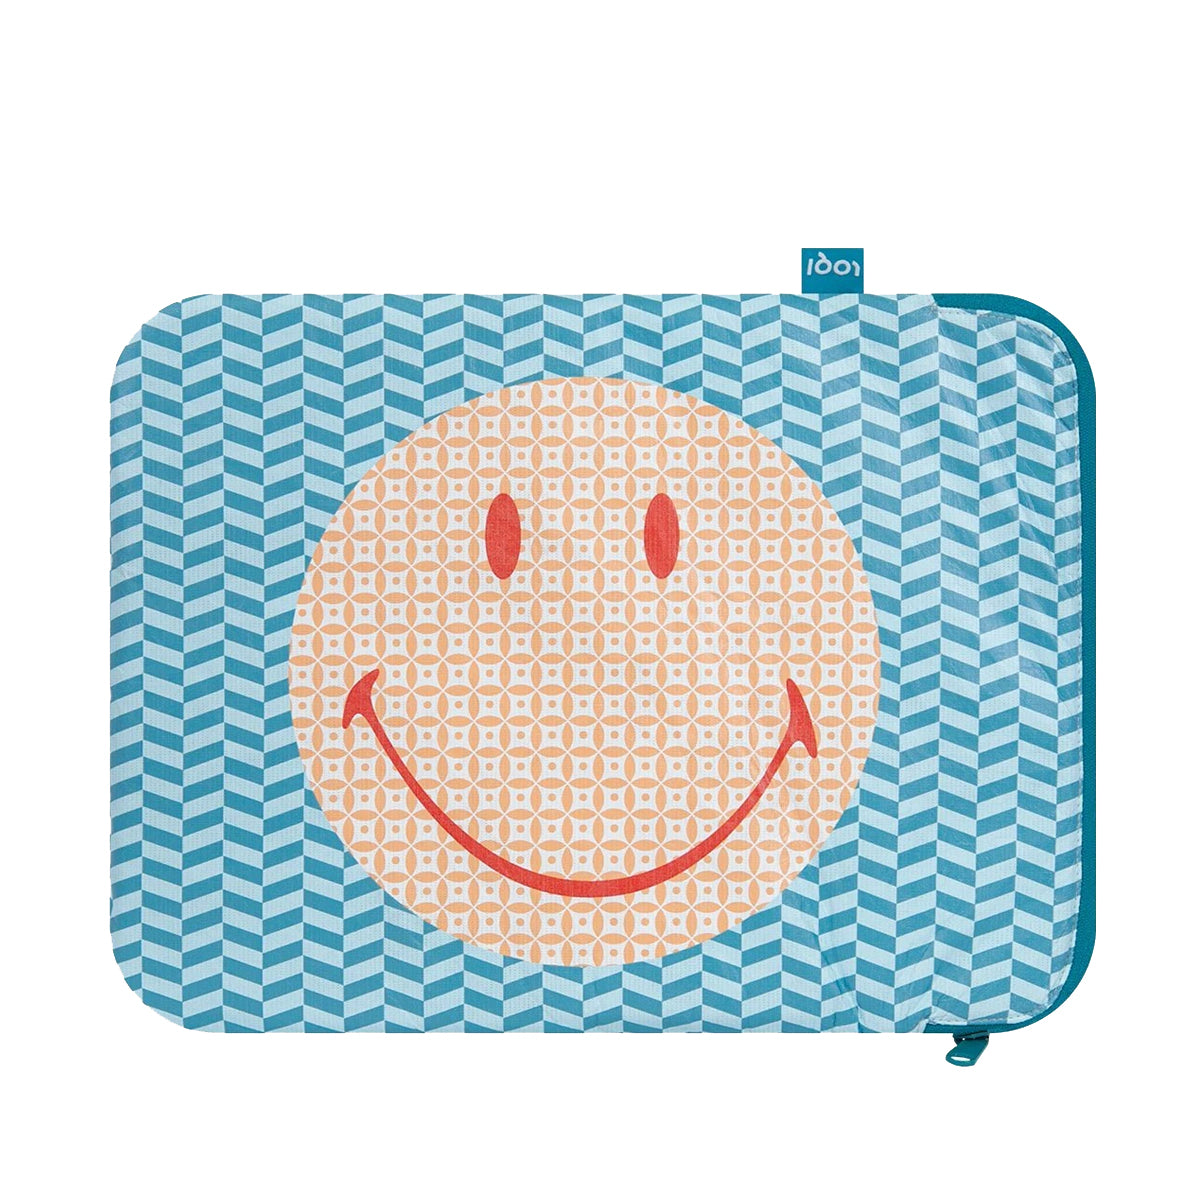 LOQI Artists Smiley Tyvek Geometric Laptop Cover